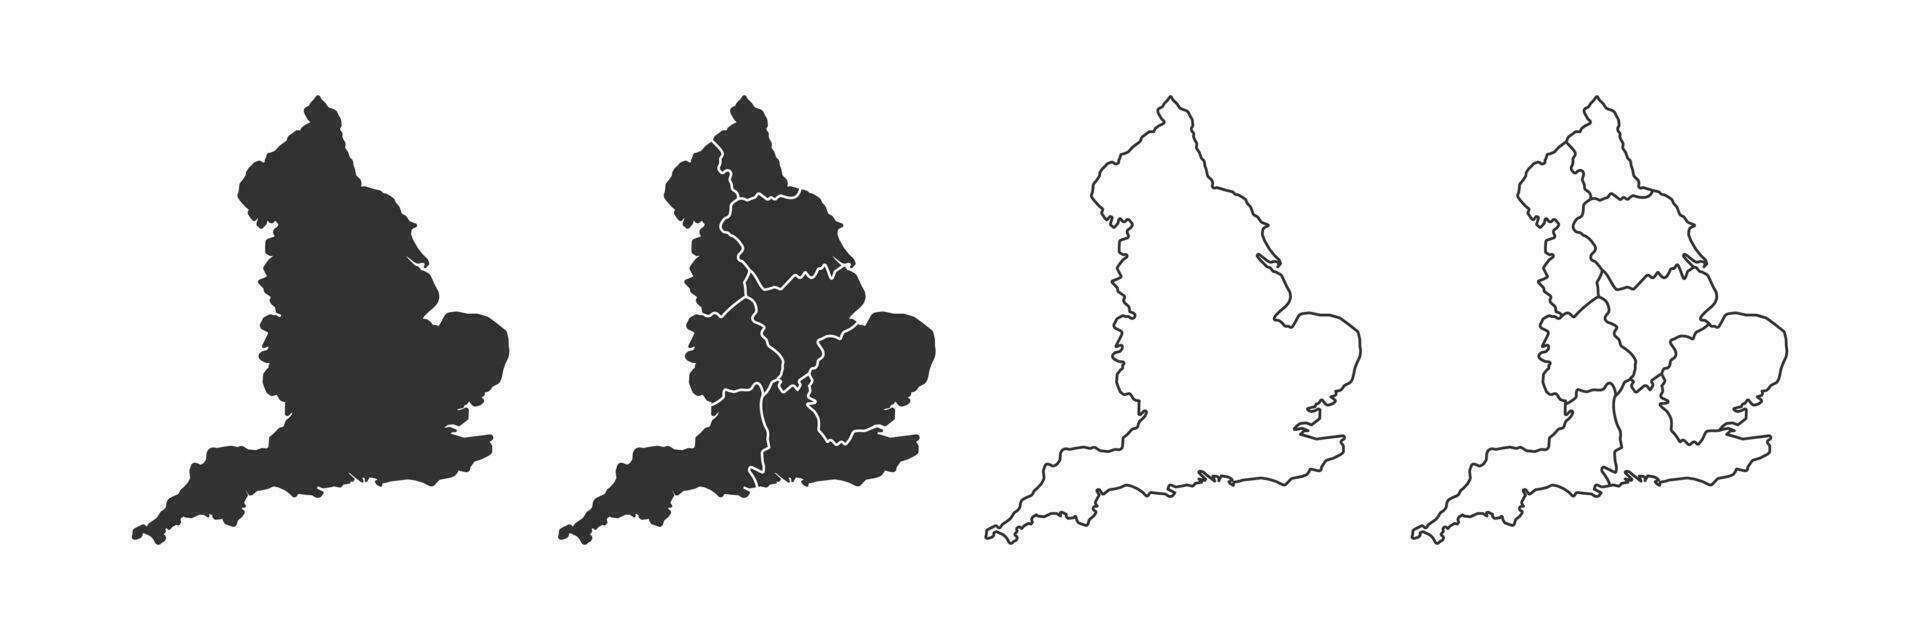 England map icon. English country border symbol. UK geography signs. Europe symbols. British kingdom icons. Black color. Vector sign.